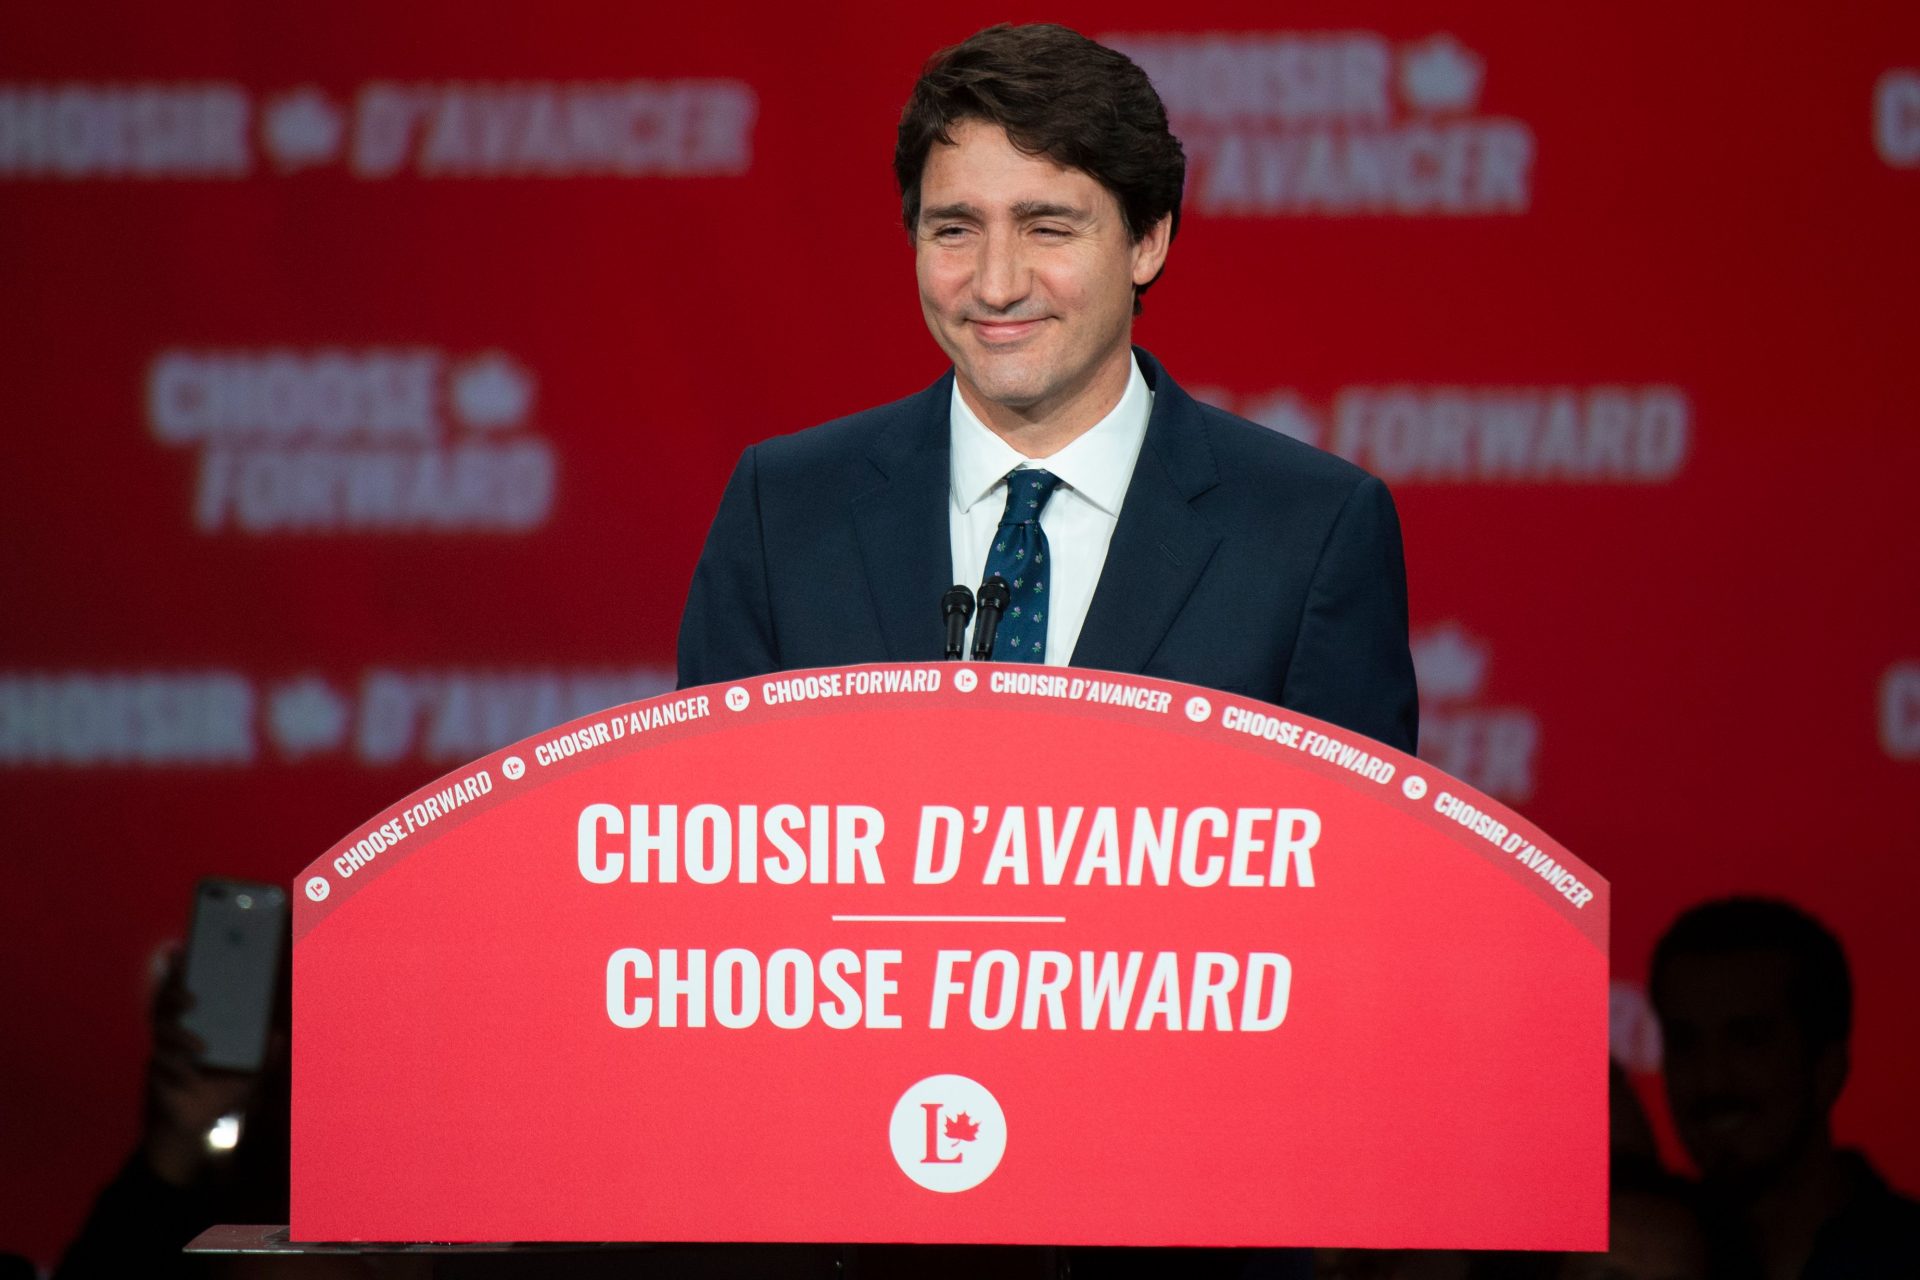 People aren’t succeeding in Trudeau’s Canada